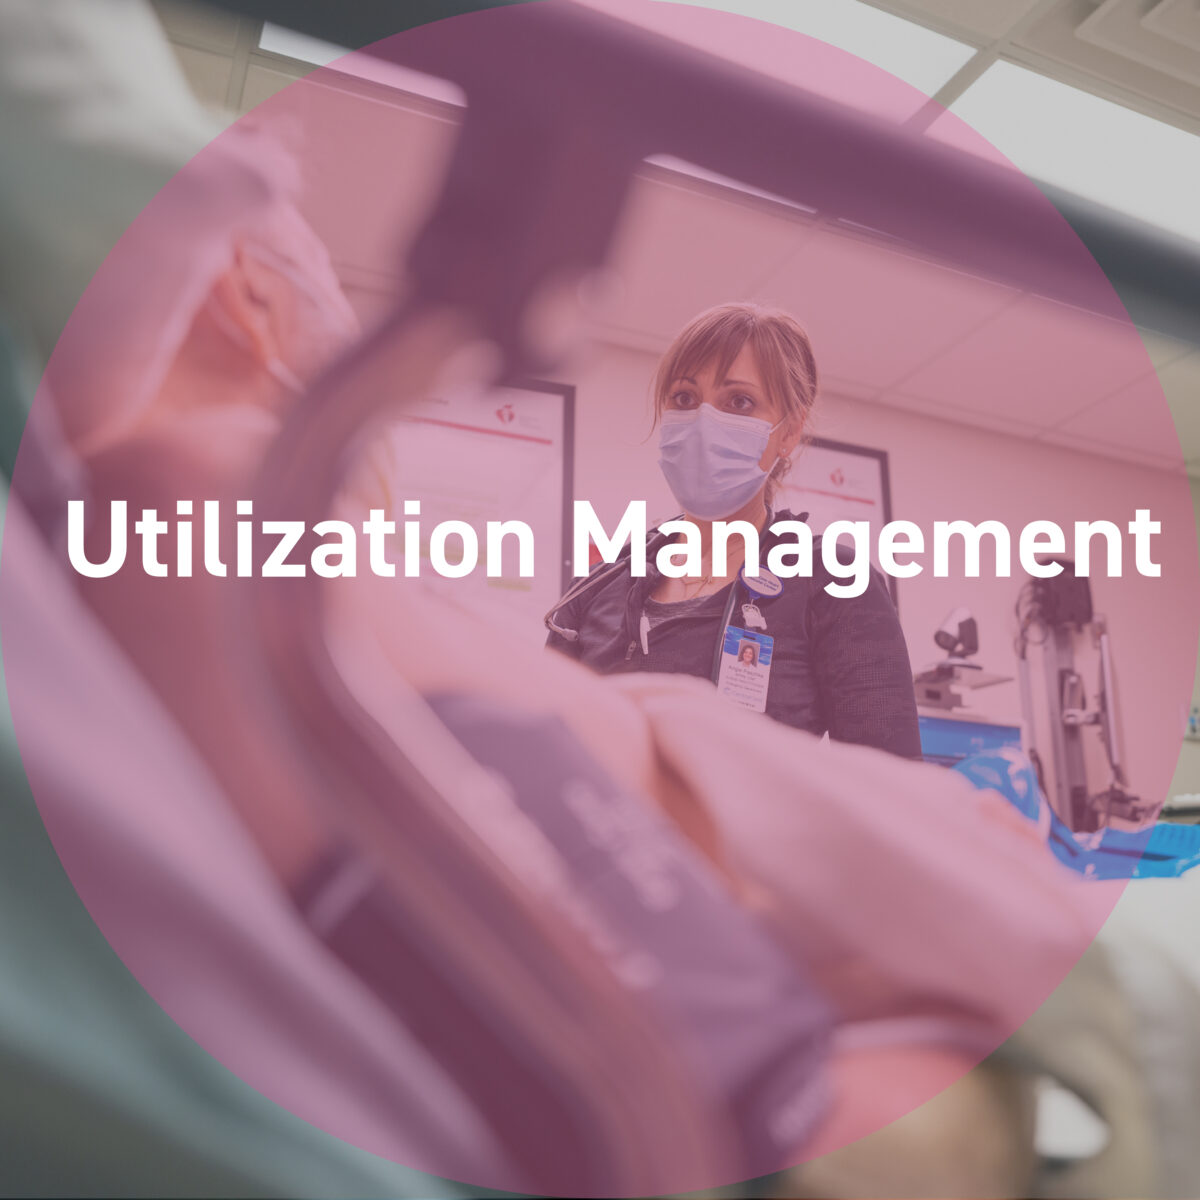 Promotion for Utilization Management Clinical Documentation CME